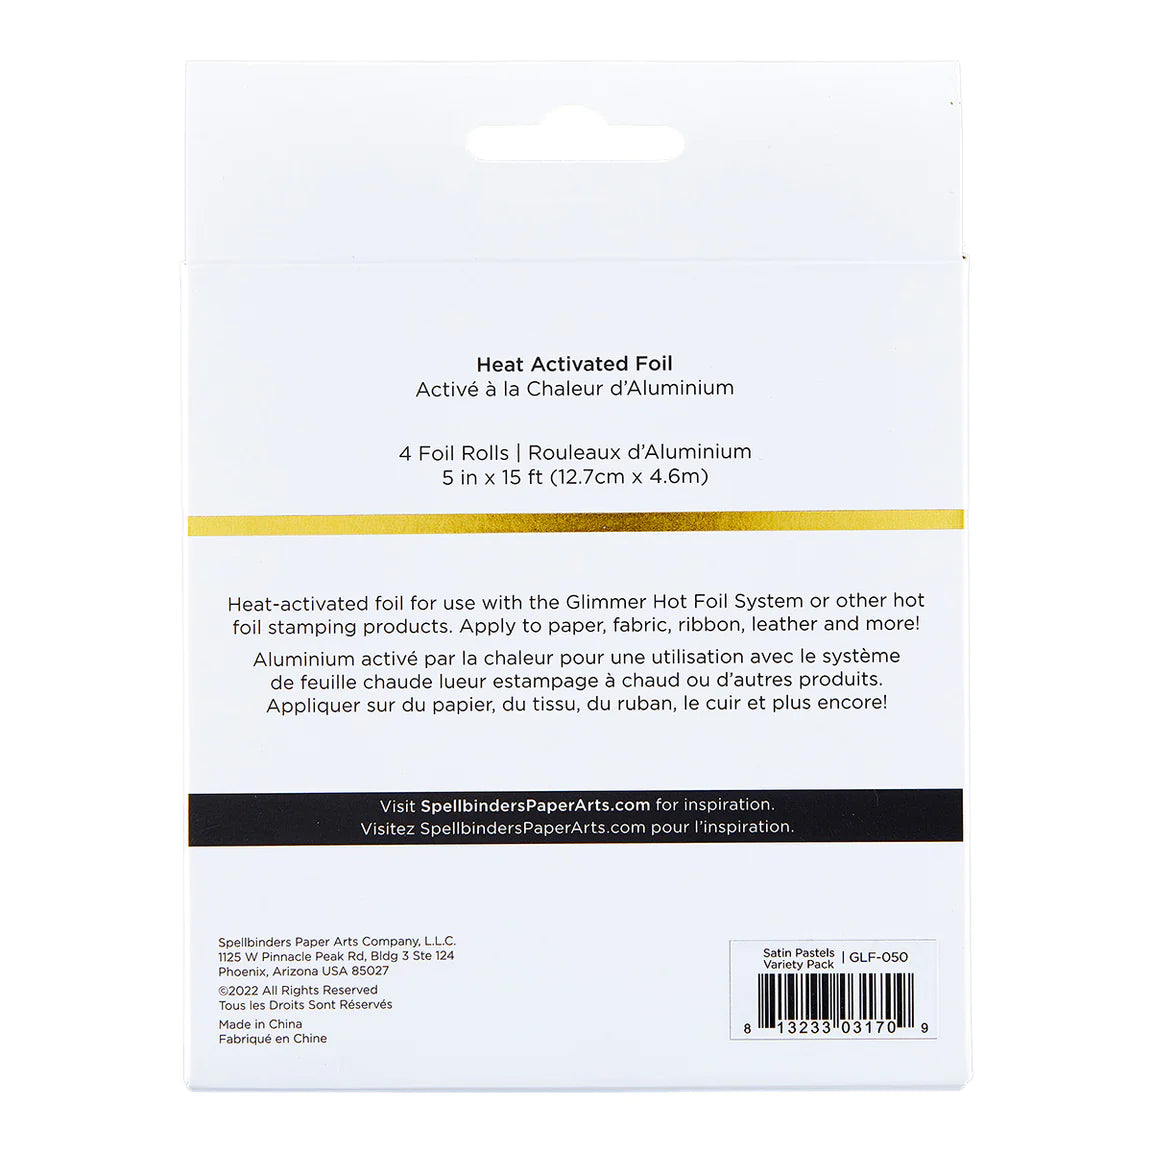 Glimmer Hot Foil System - Satin Pastels Variety Pack –